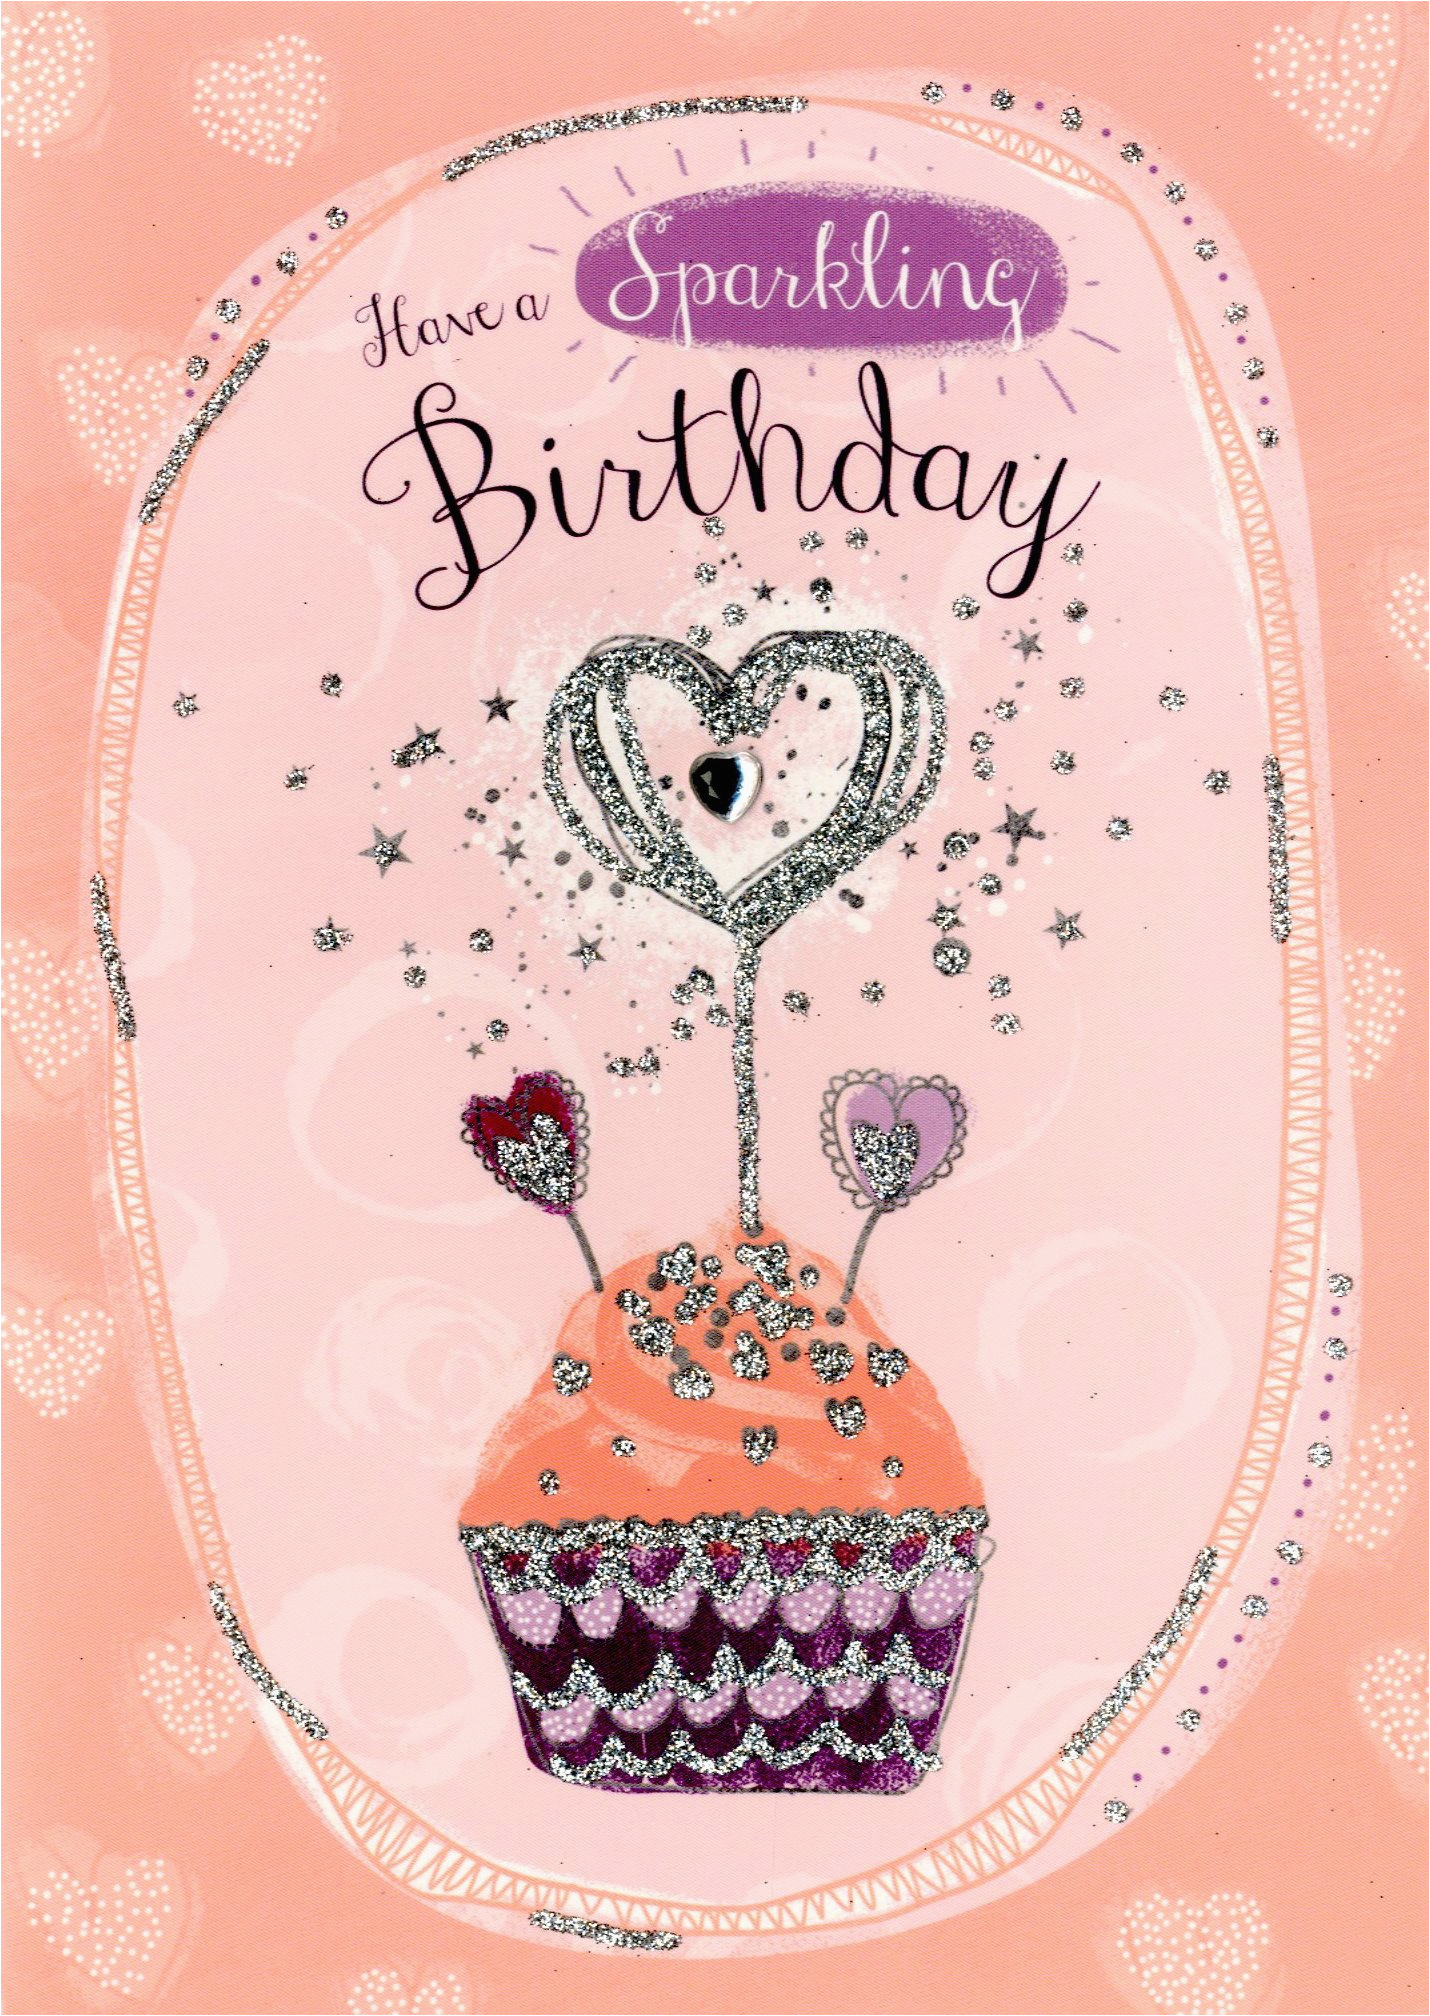 Sparkling Birthday Greeting Cards Sparkling Birthday Greeting Card Cards Love Kates